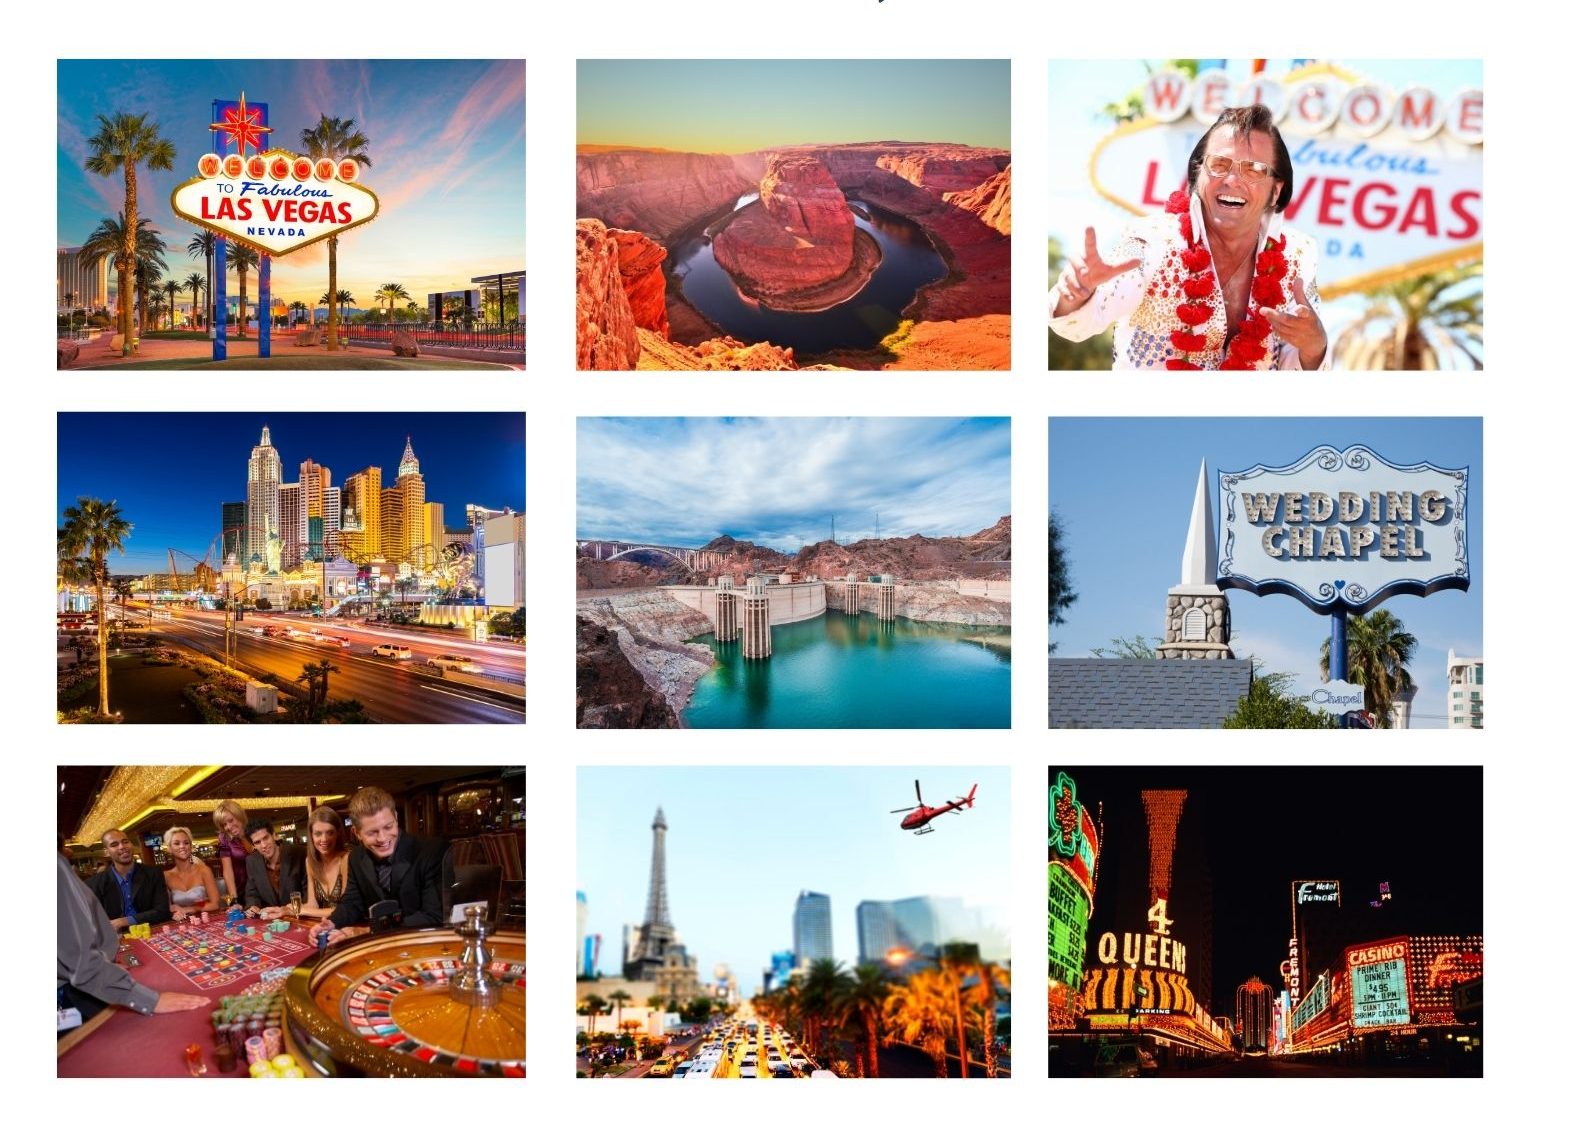 Las Vegas Web landing page